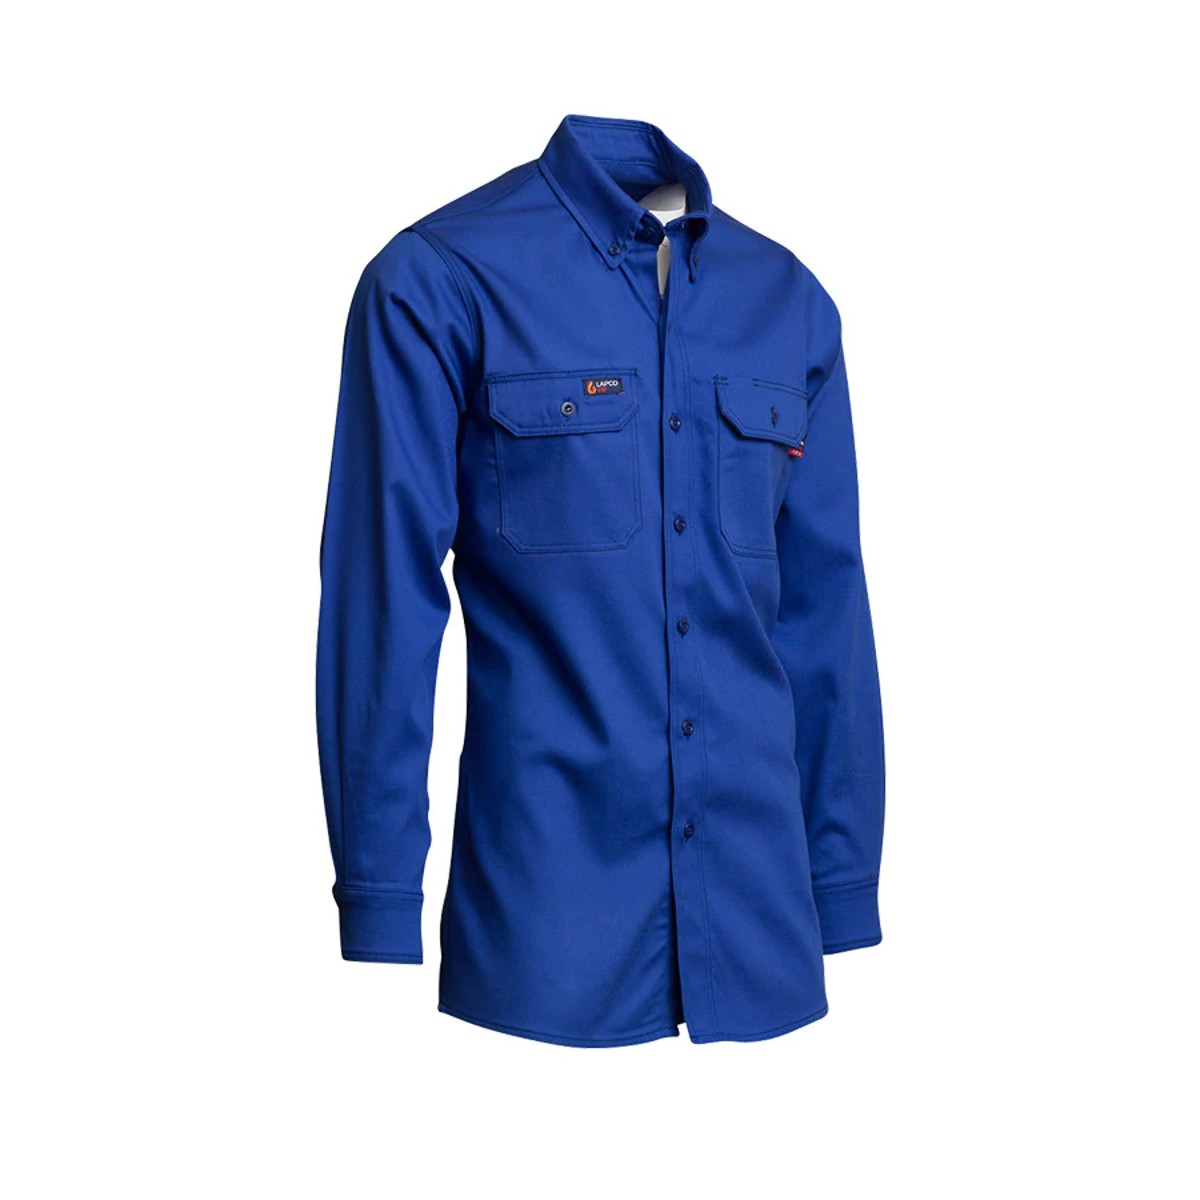 LAPCO FR Uniform Shirt in Royal Blue